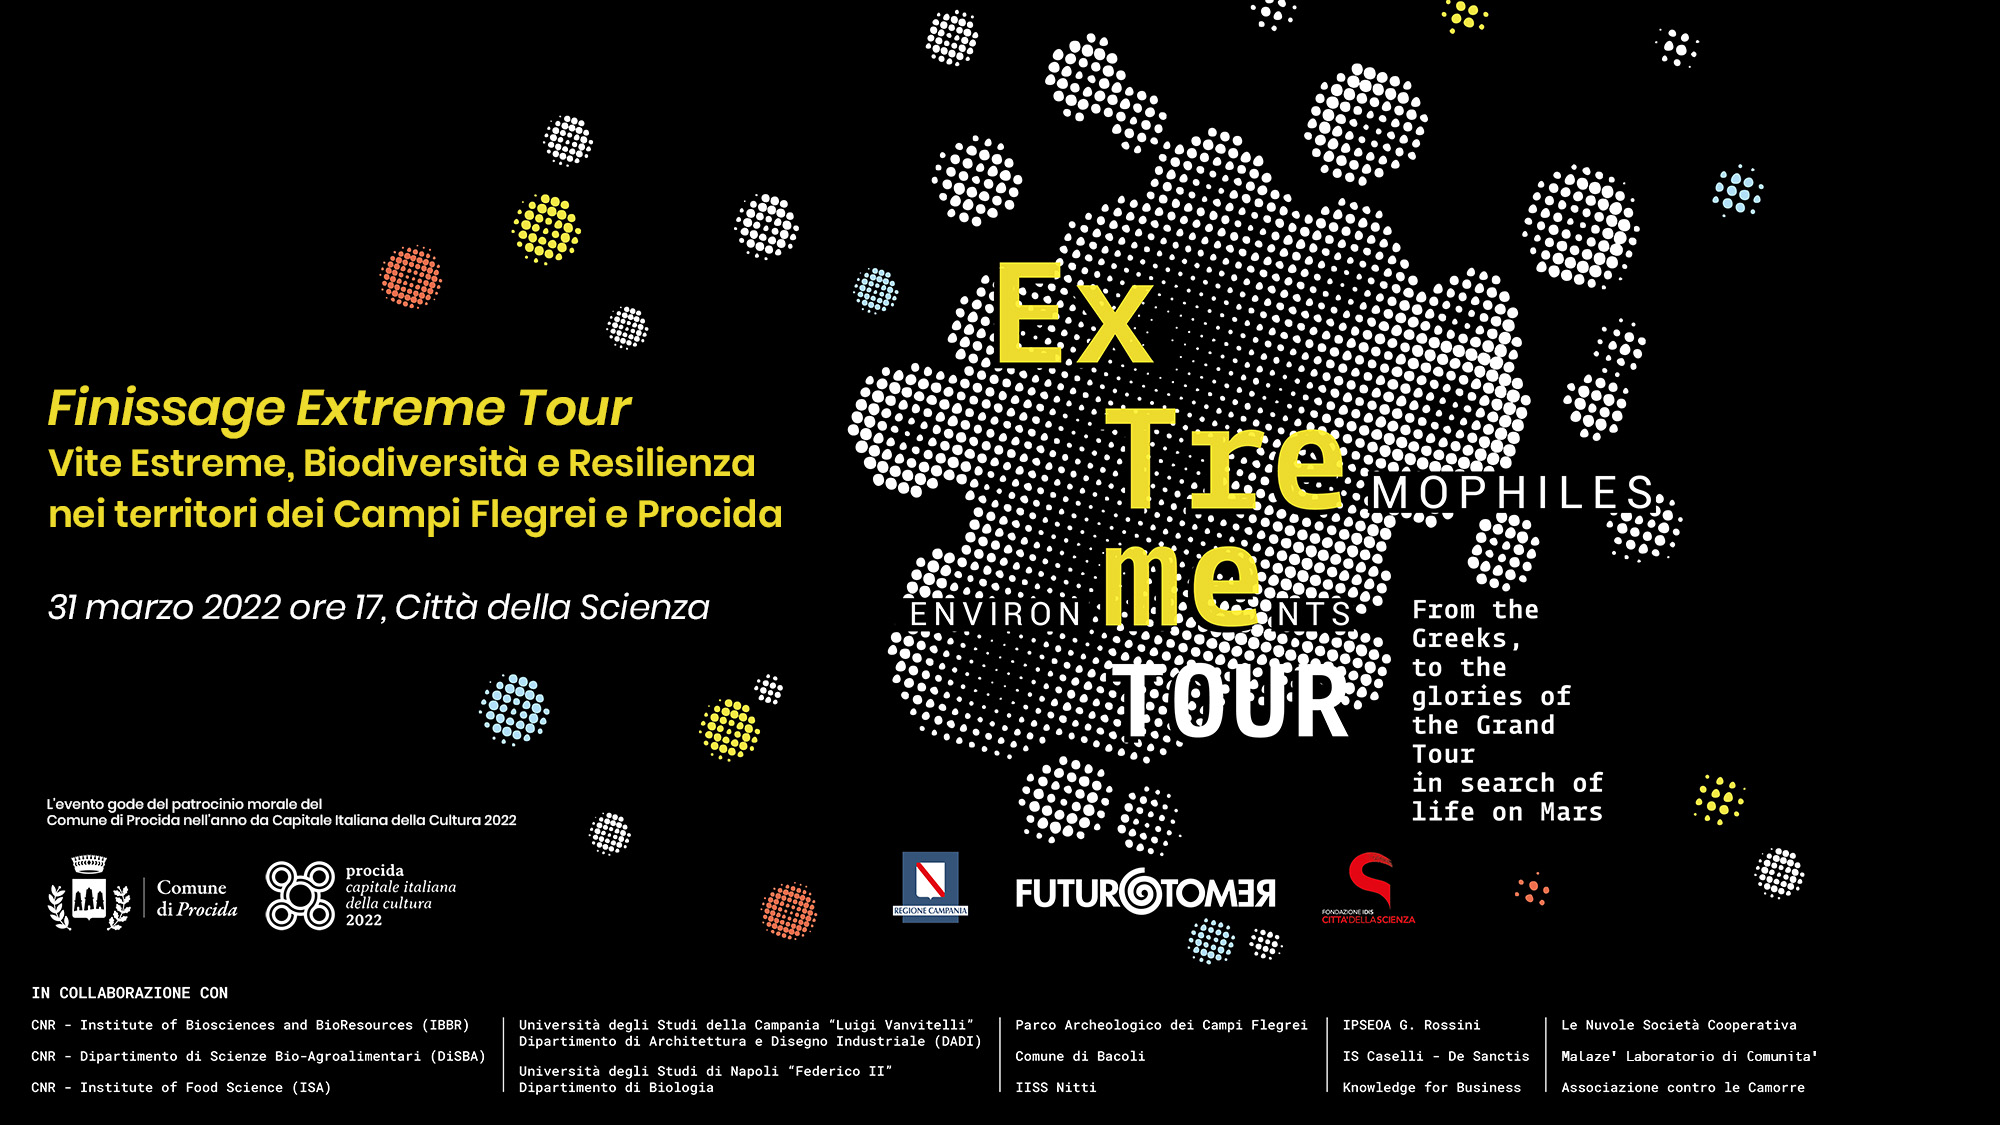 Finnisage_Extreme-Tour_31_marzo